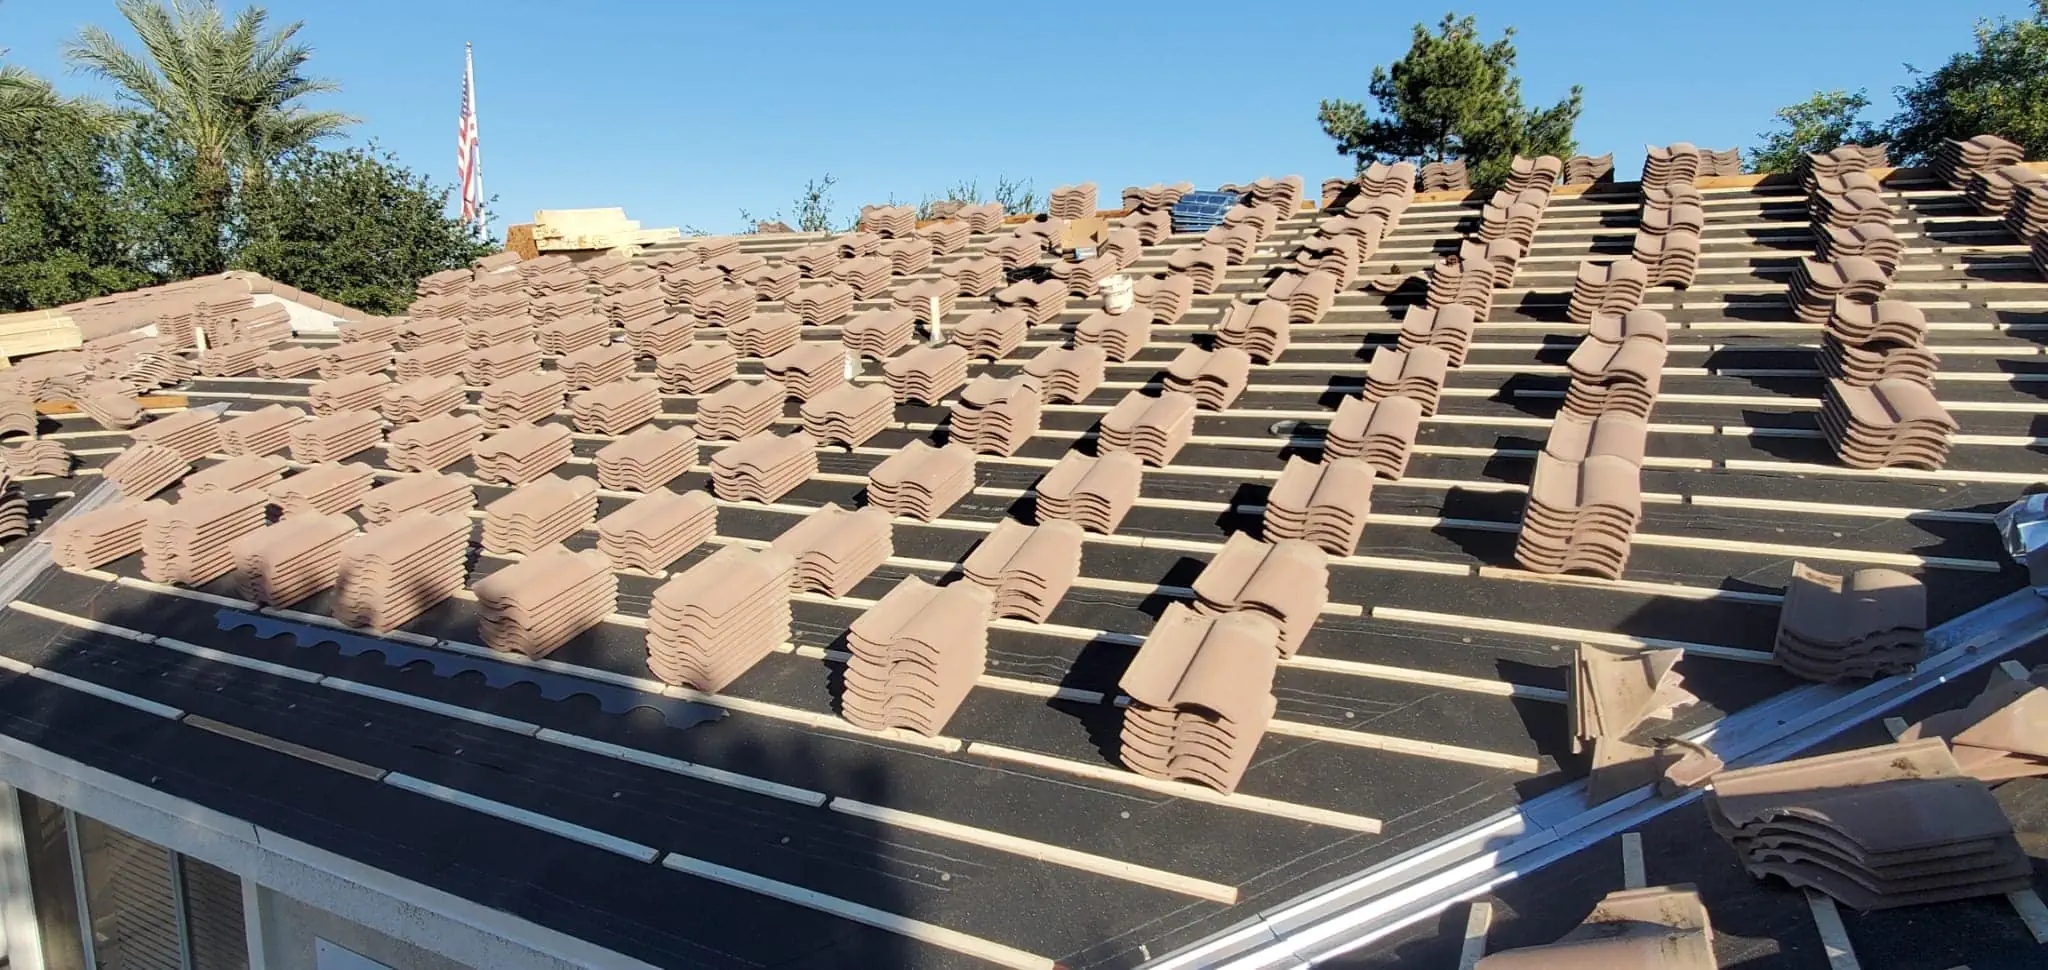 peoria new tile roof repair